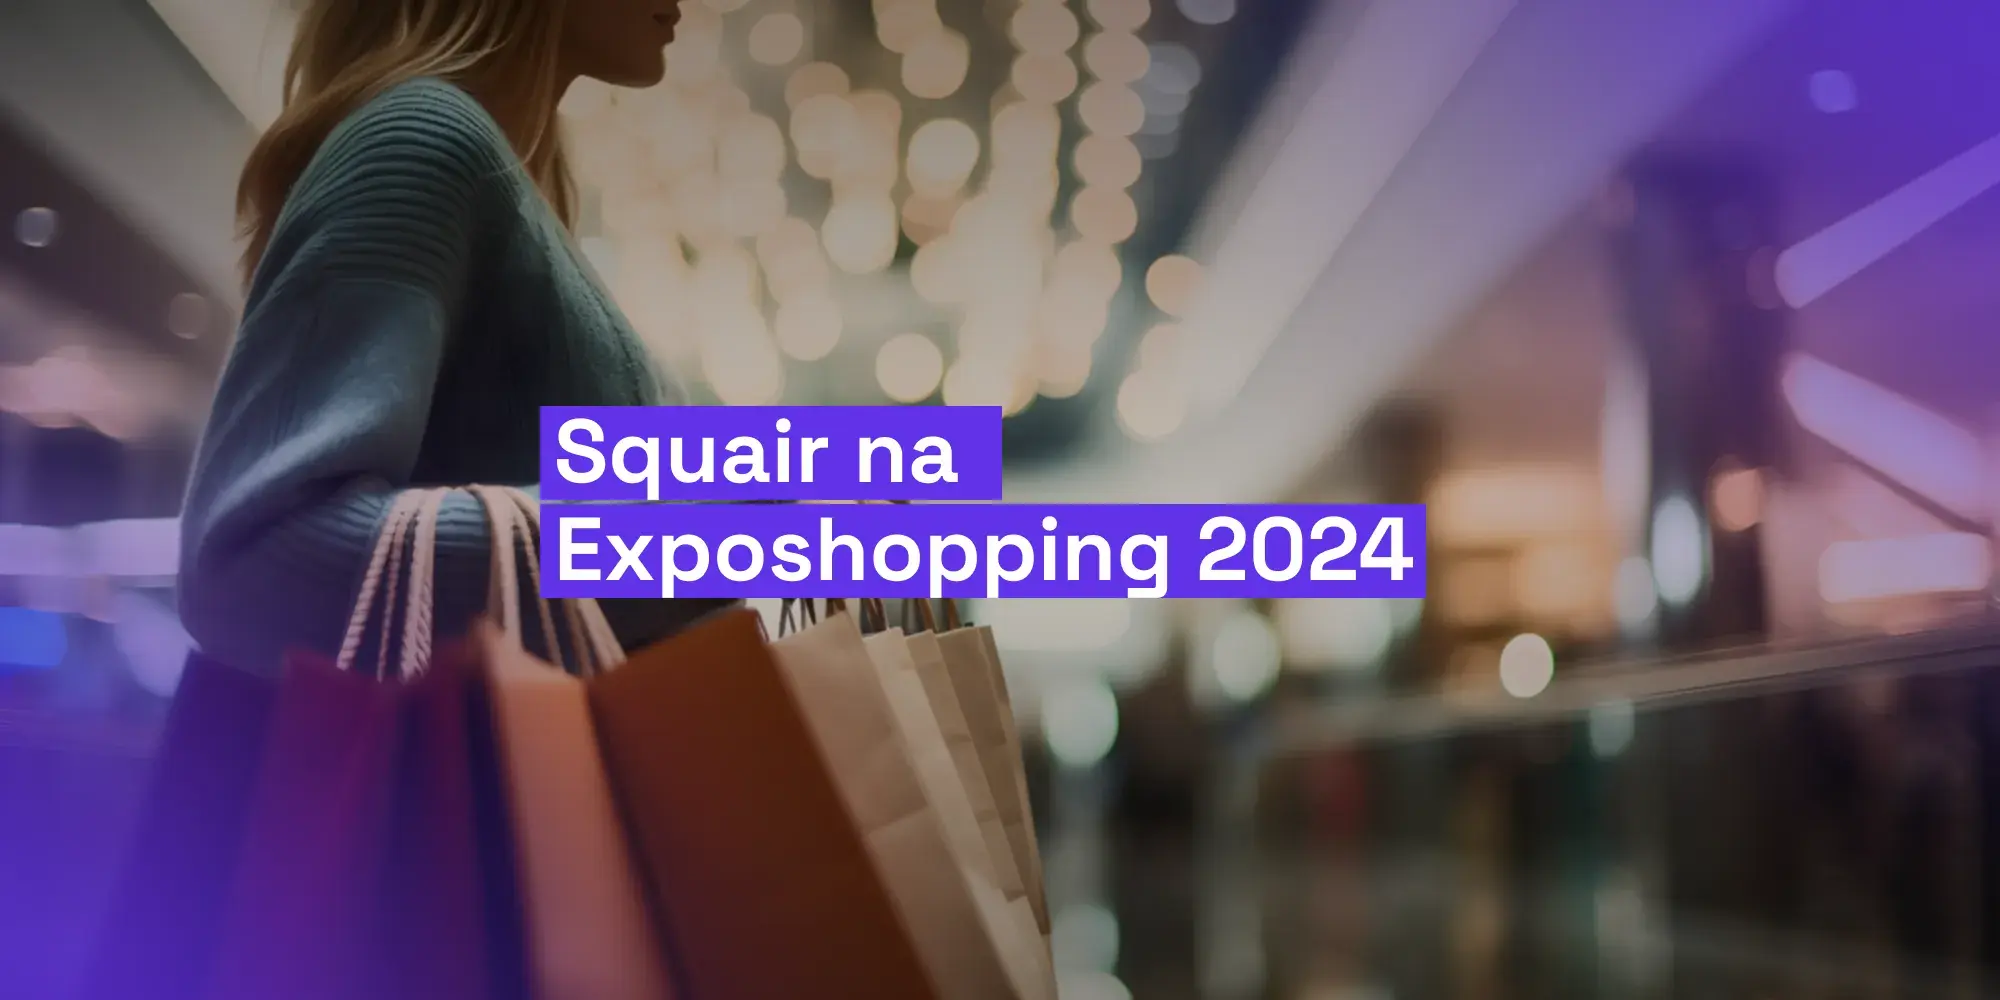 Squair na exposhopping 2024